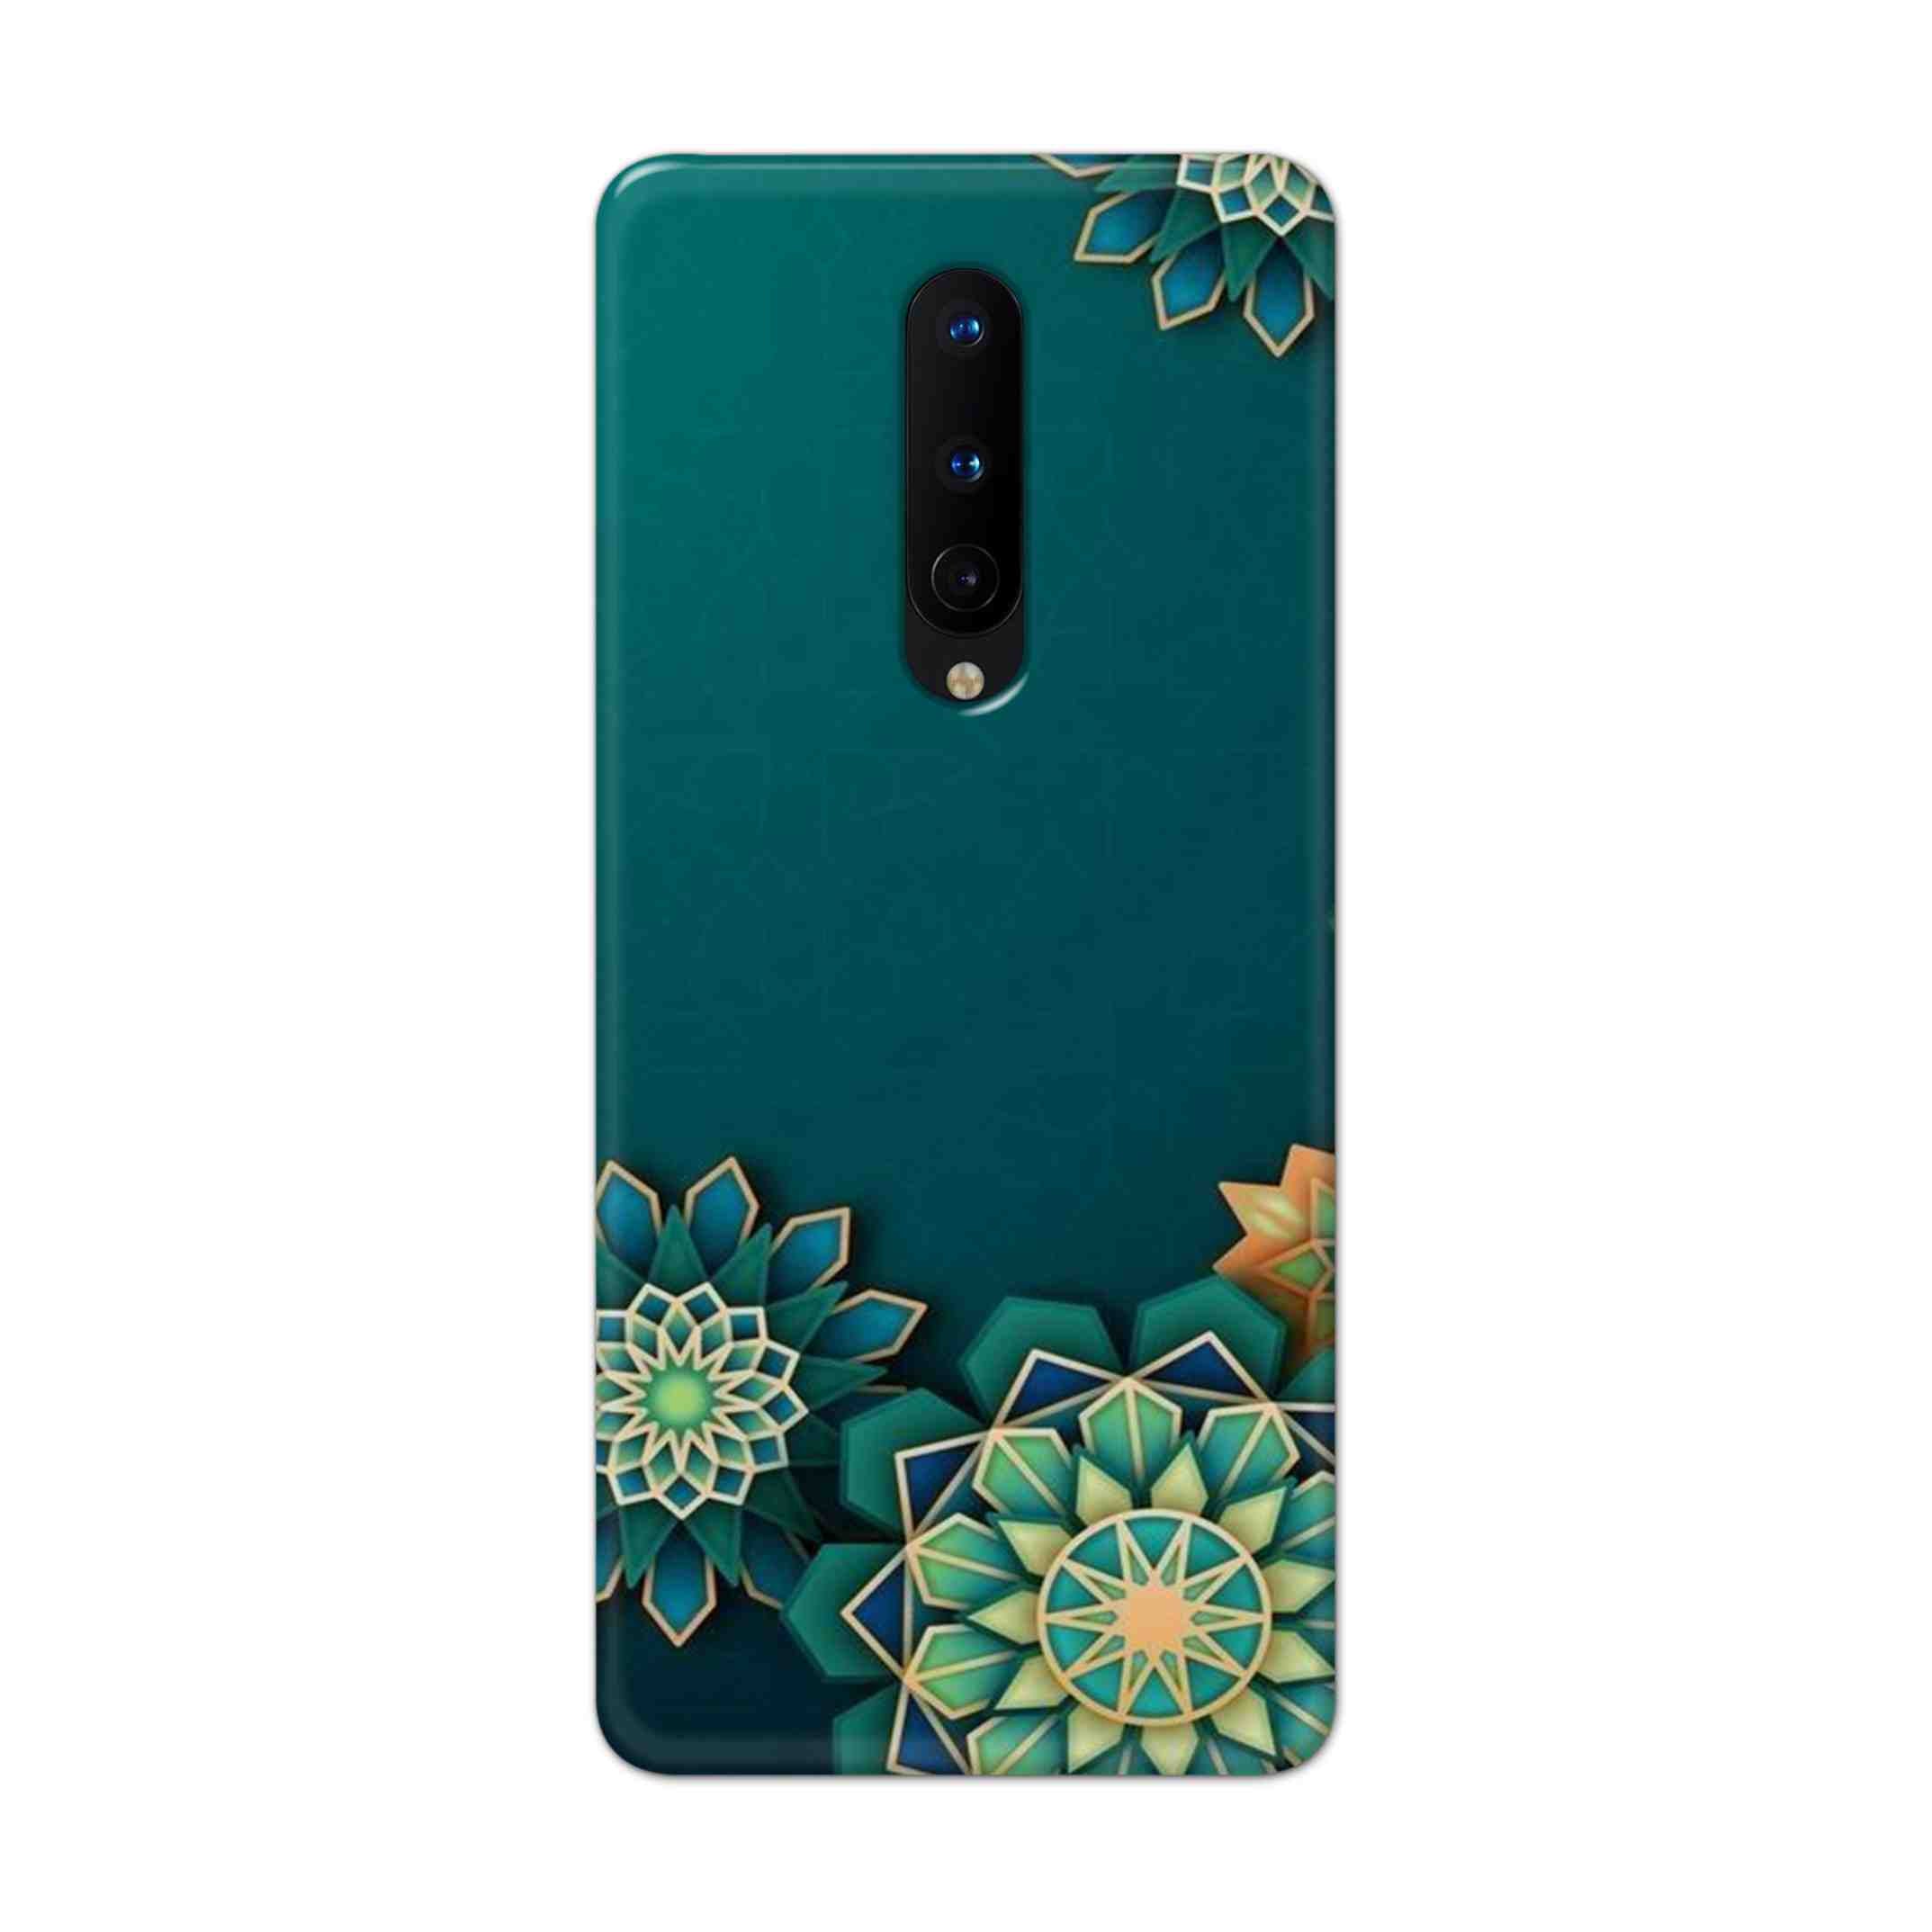 Buy Green Flower Hard Back Mobile Phone Case Cover For OnePlus 8 Online